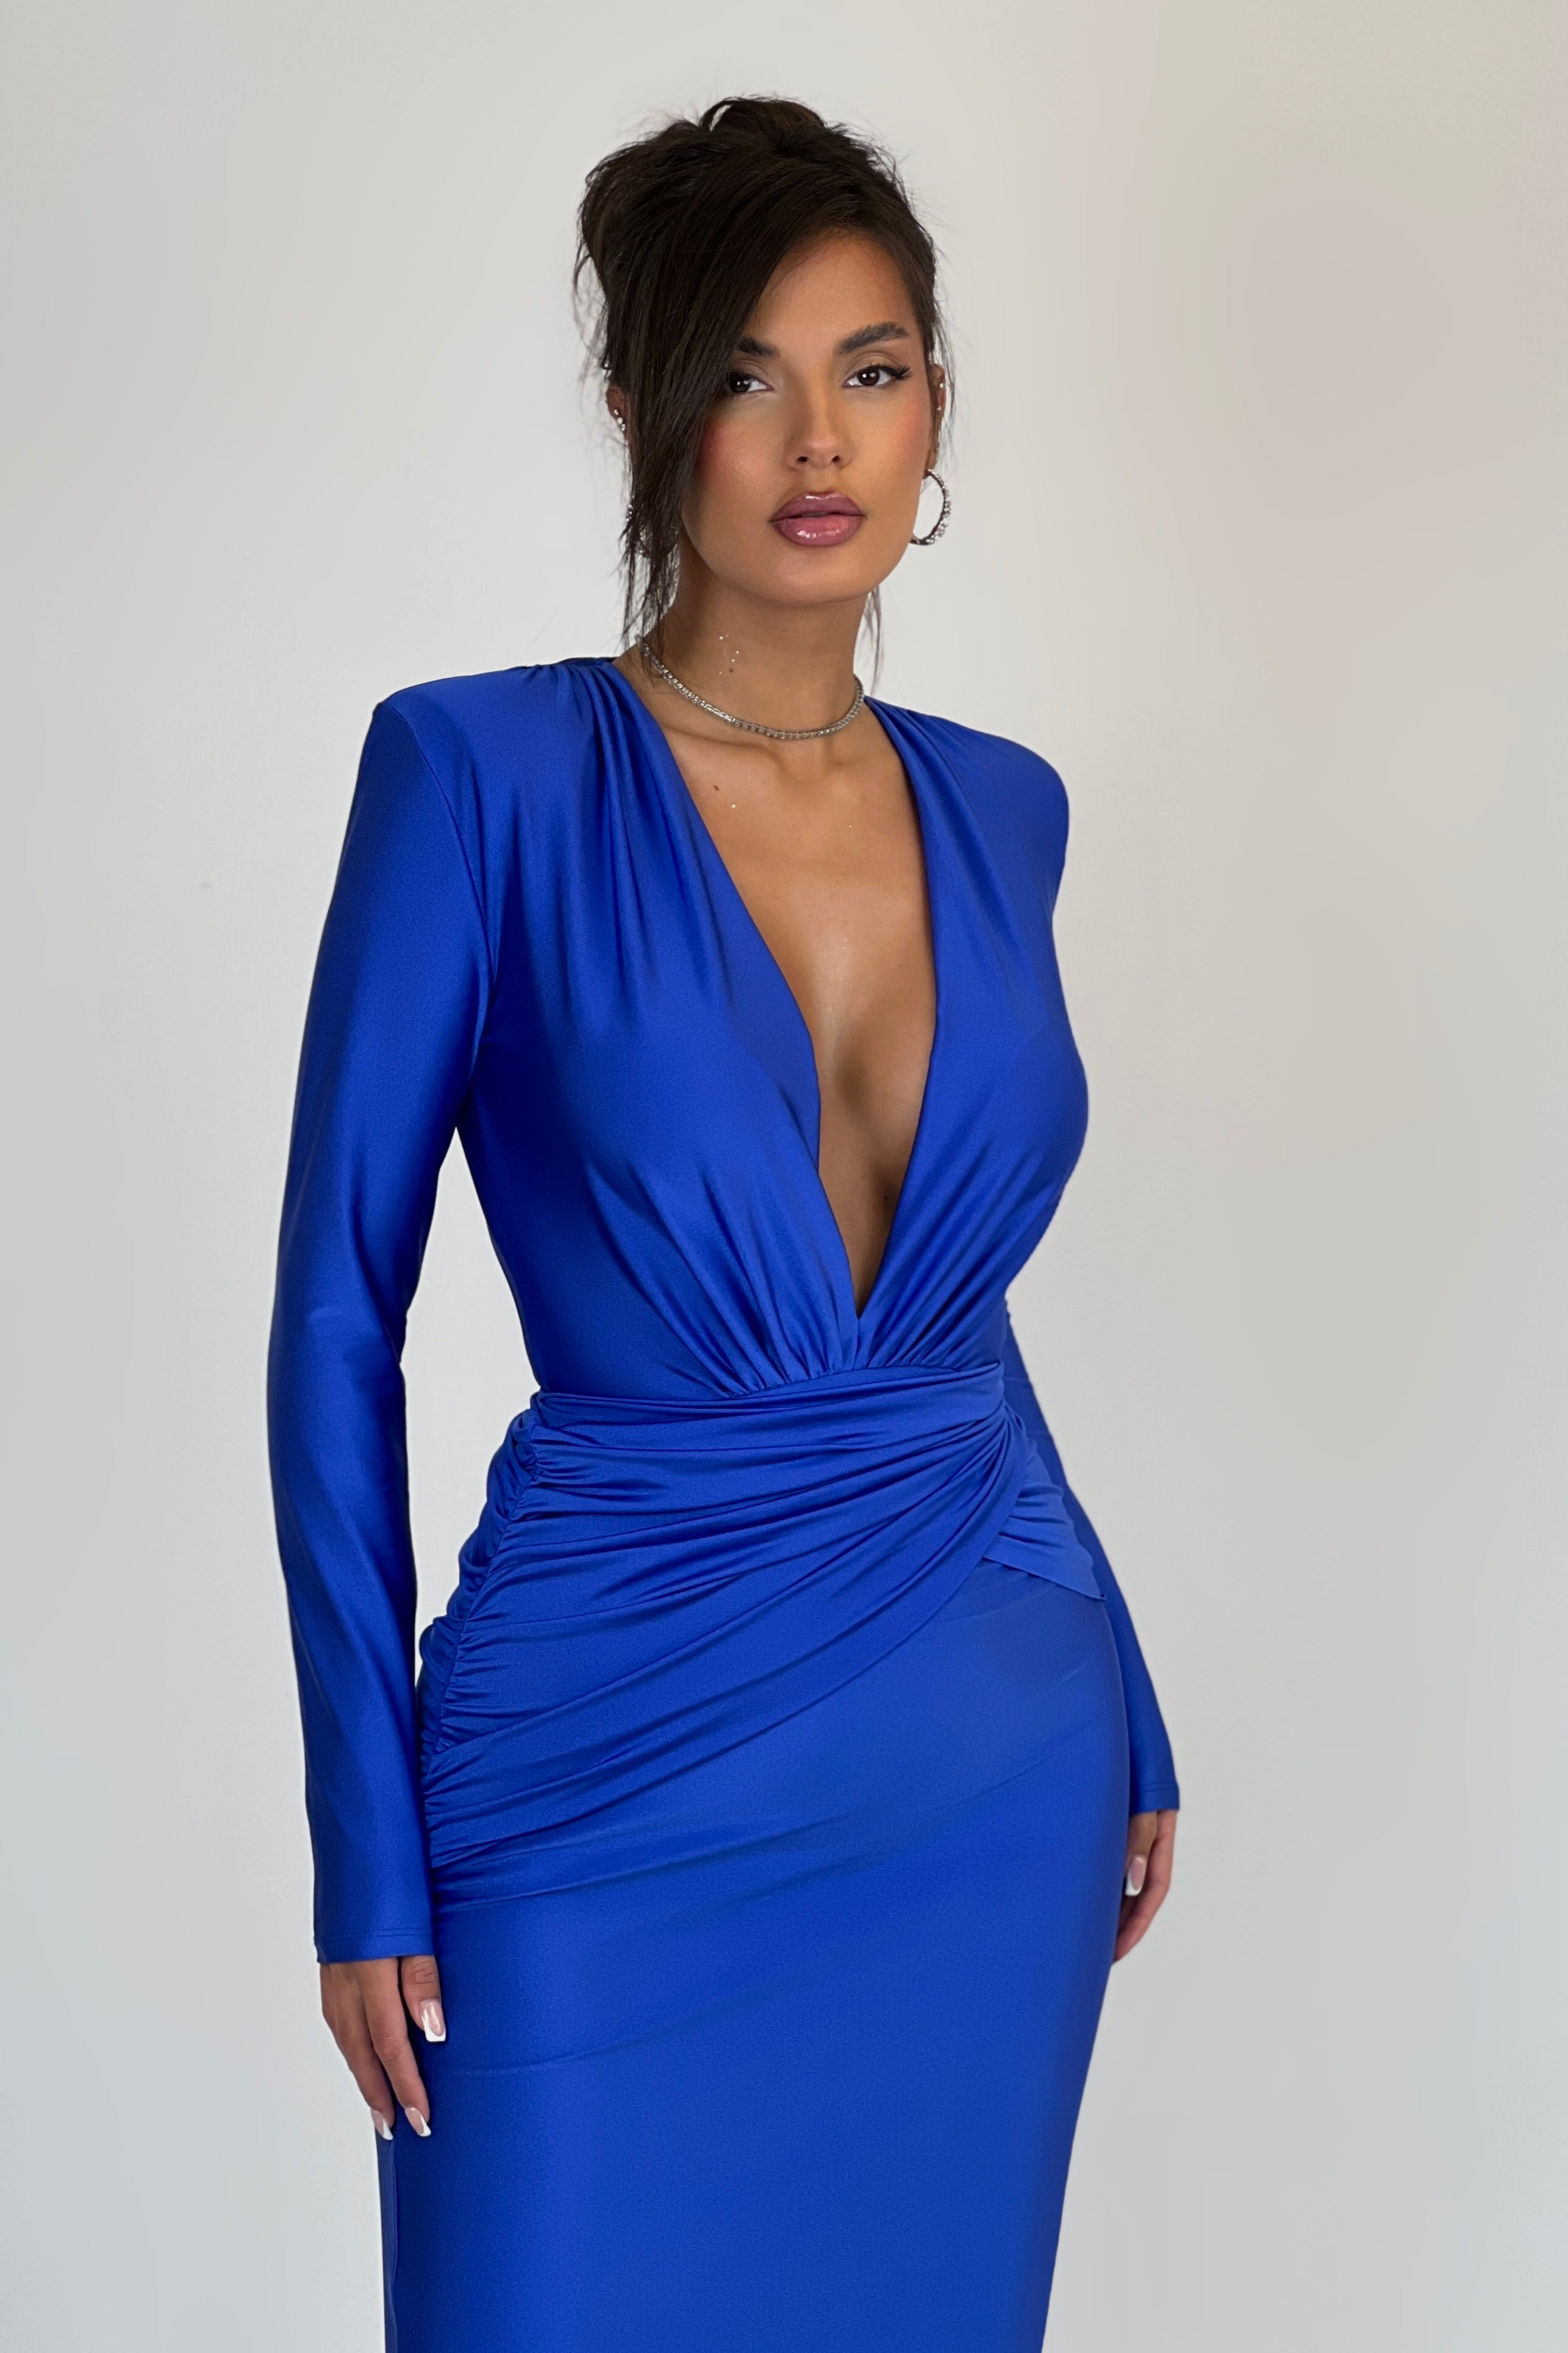 Arabella Royal Blue Dress